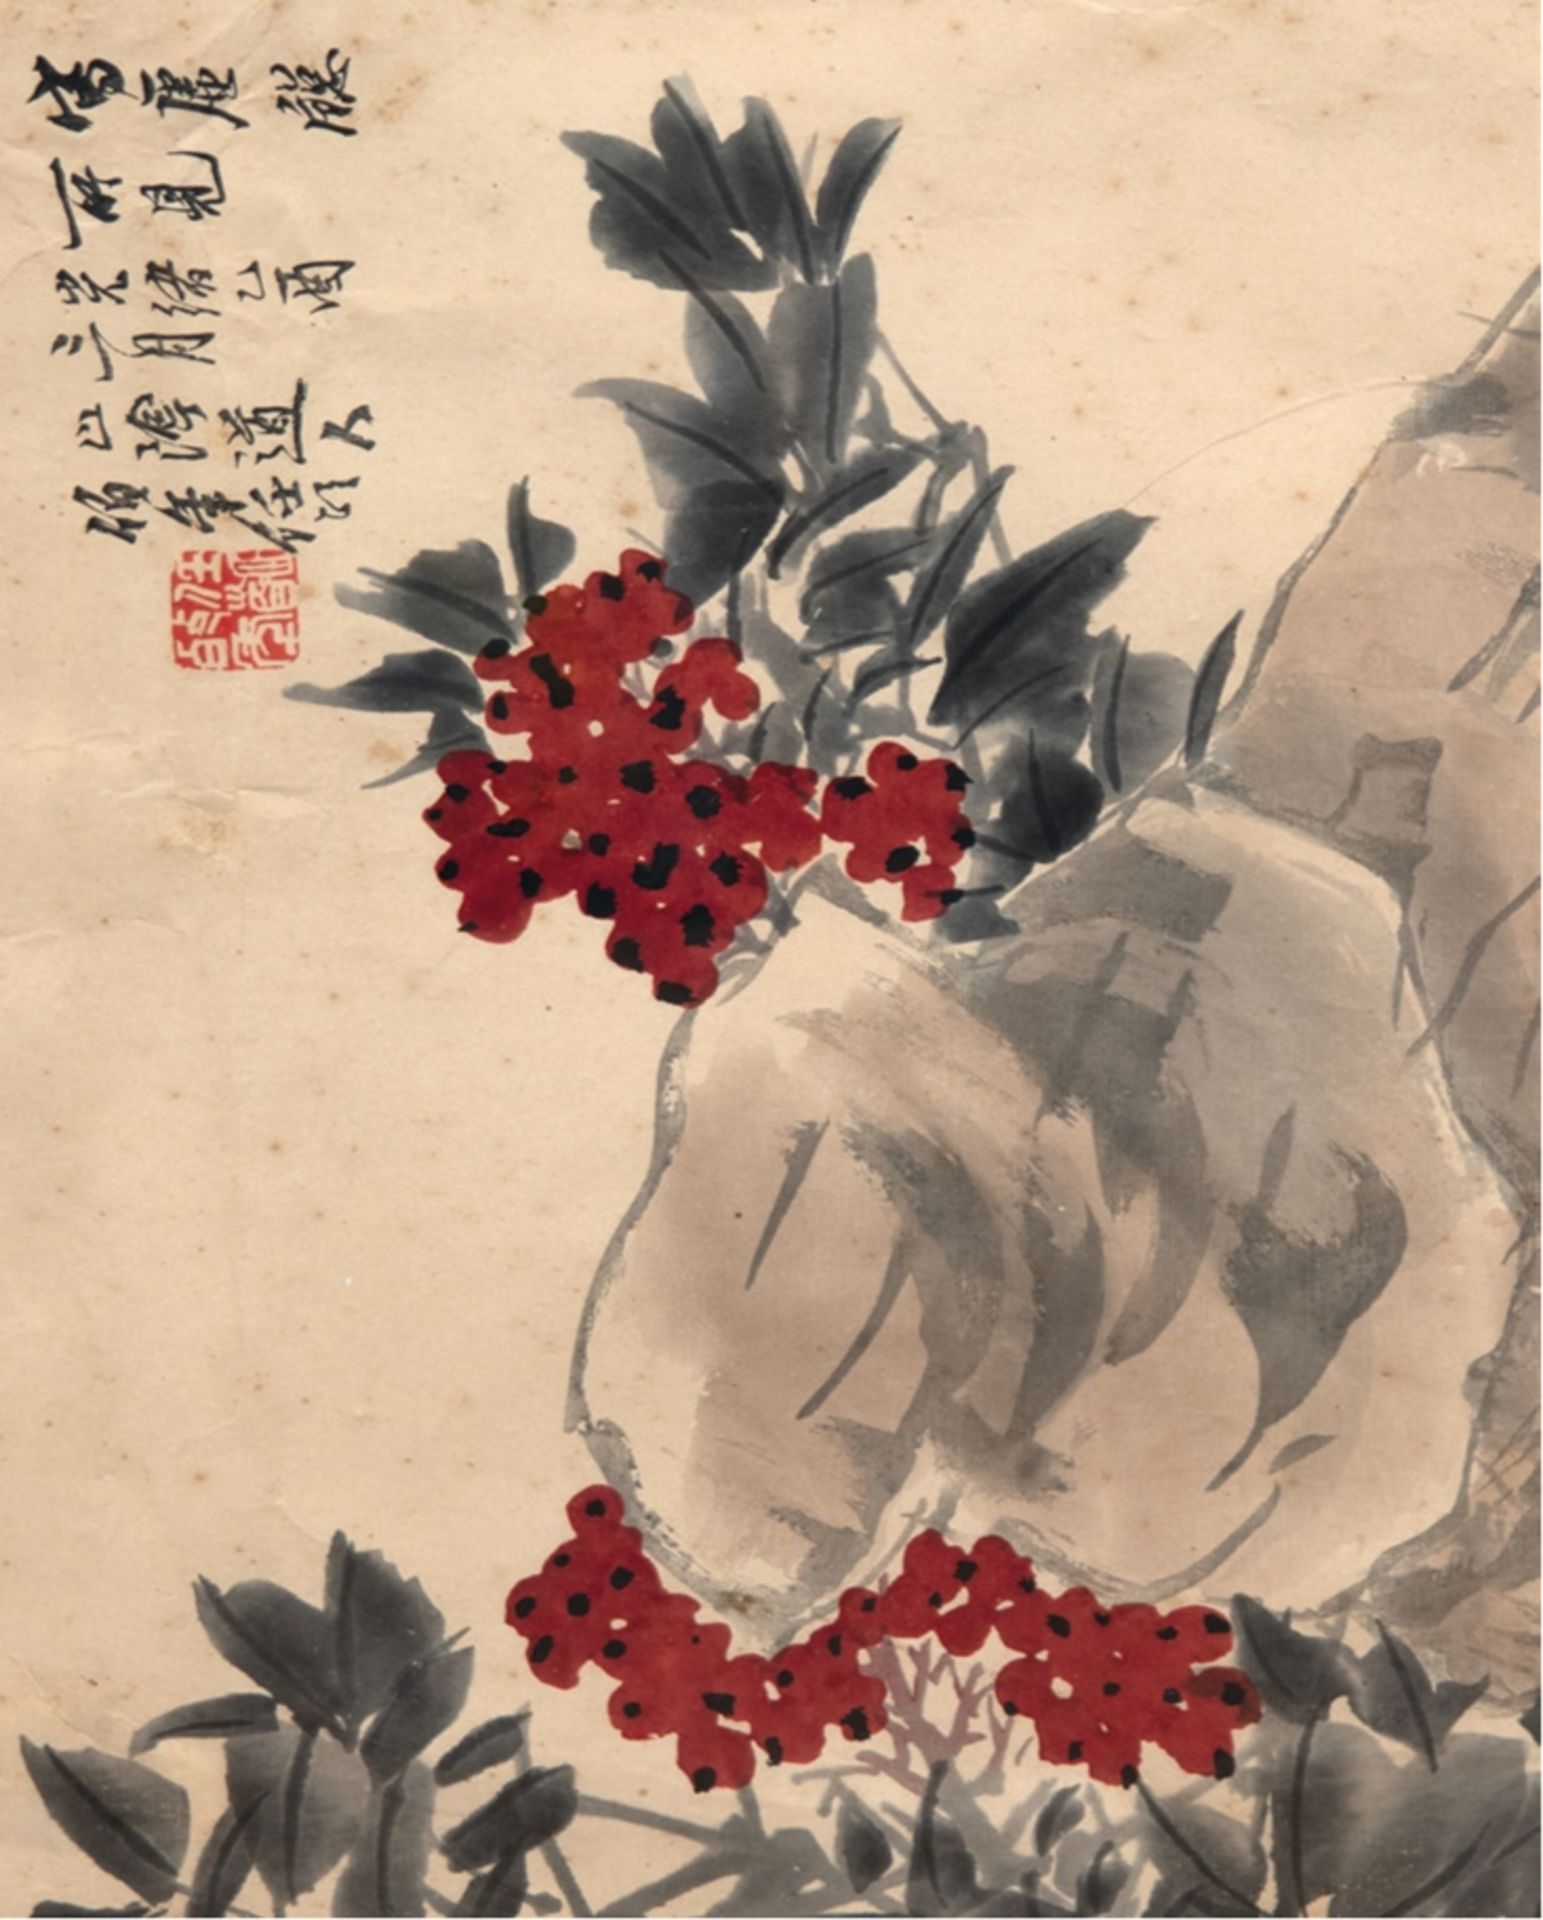 Japanischer Maler "Blumen", Aquarell, sign., leicht stockfleckig, 33x24 cm, im Passepartout hinter 